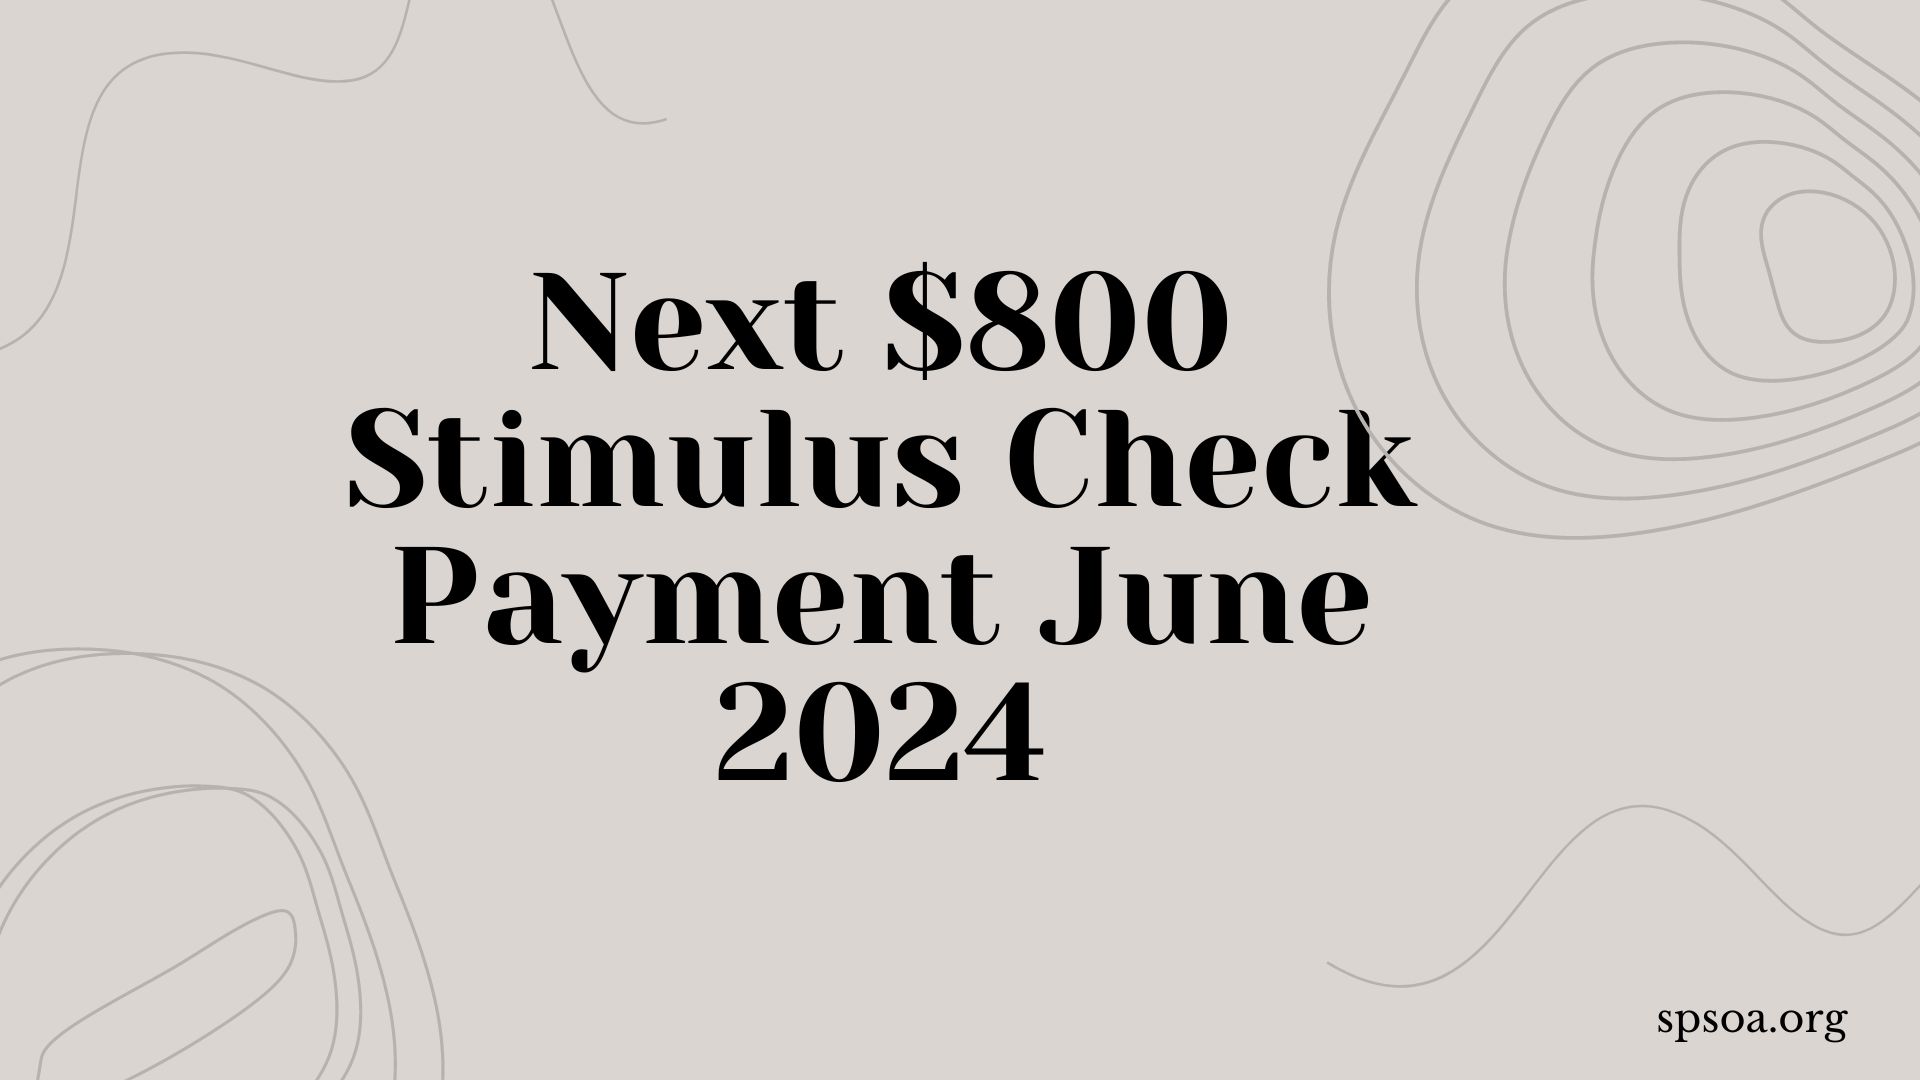 Next $800 Stimulus Check Payment June 2024